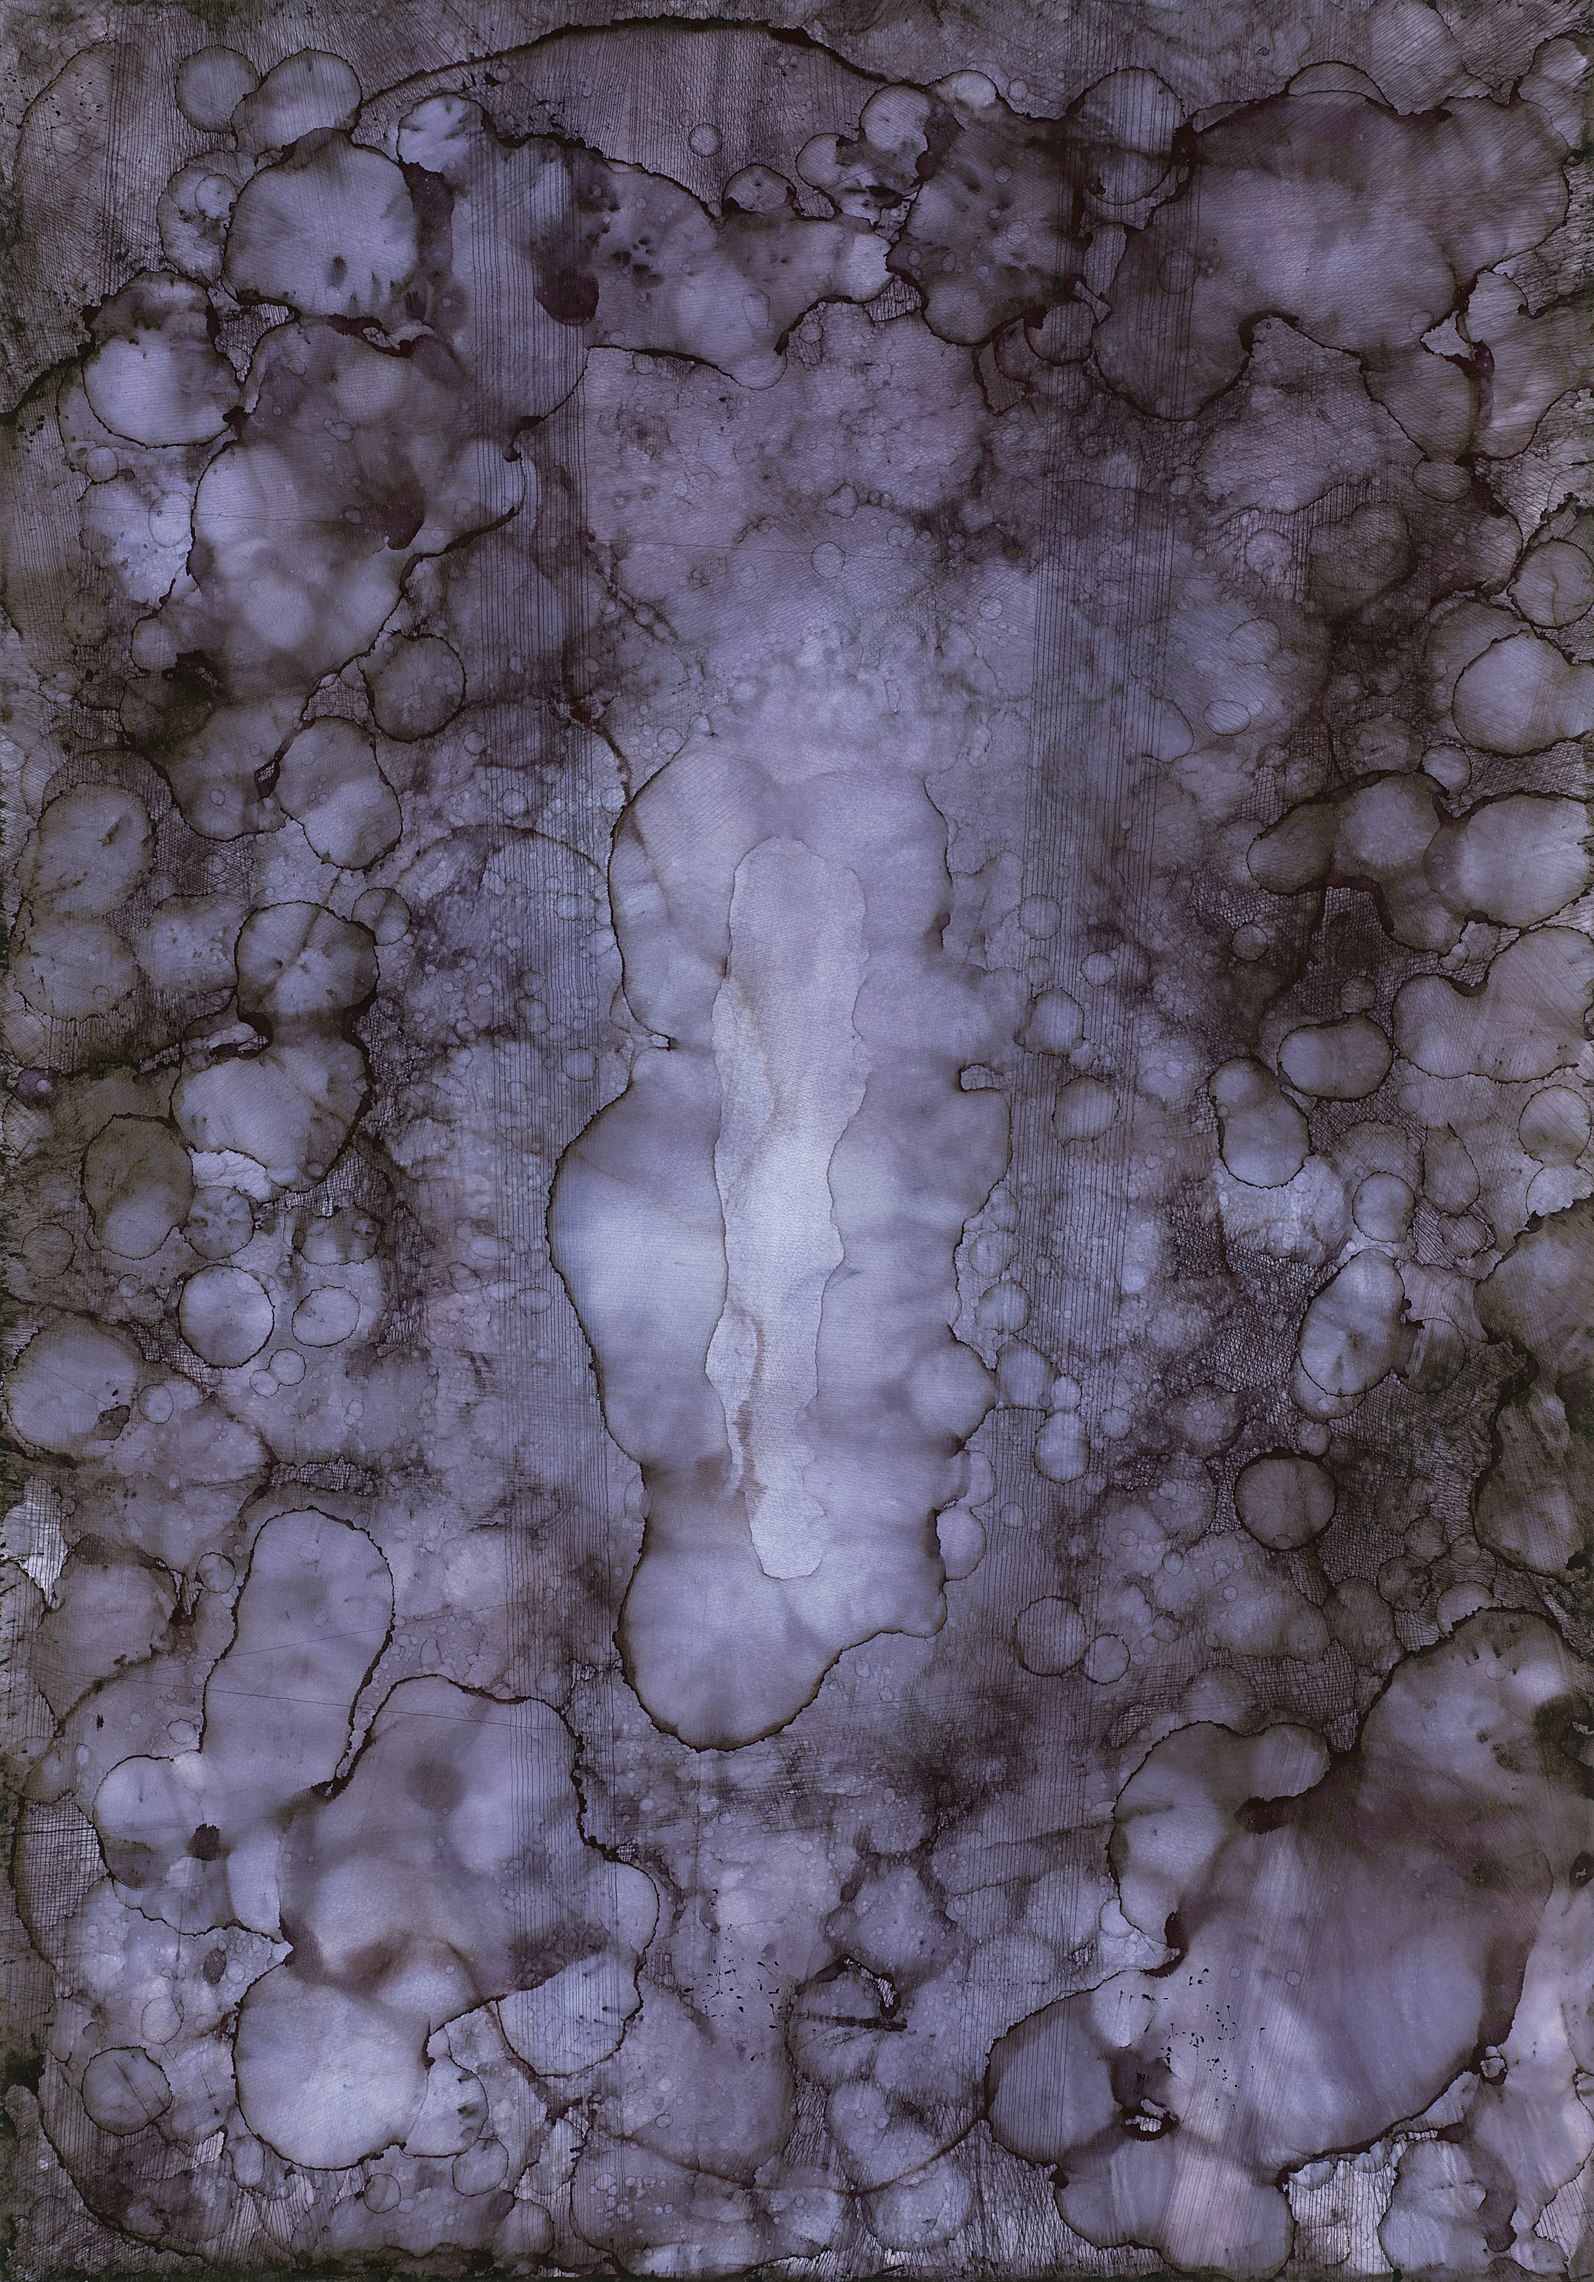 Artwork depicting bluish water droplets against a dark background